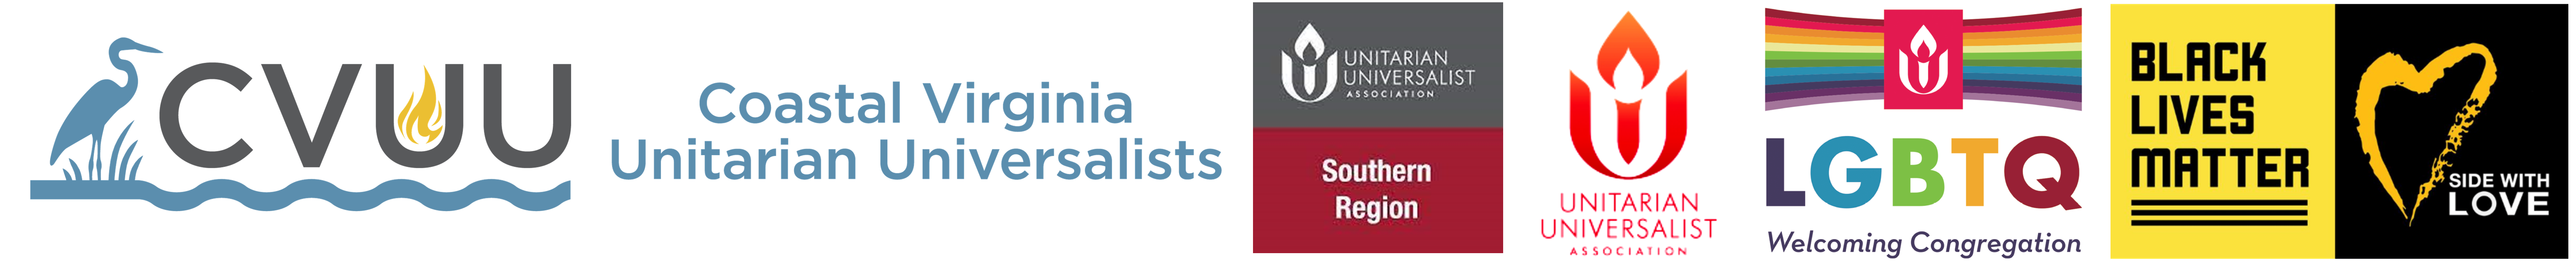 Coastal Virginia Unitarian Universalists